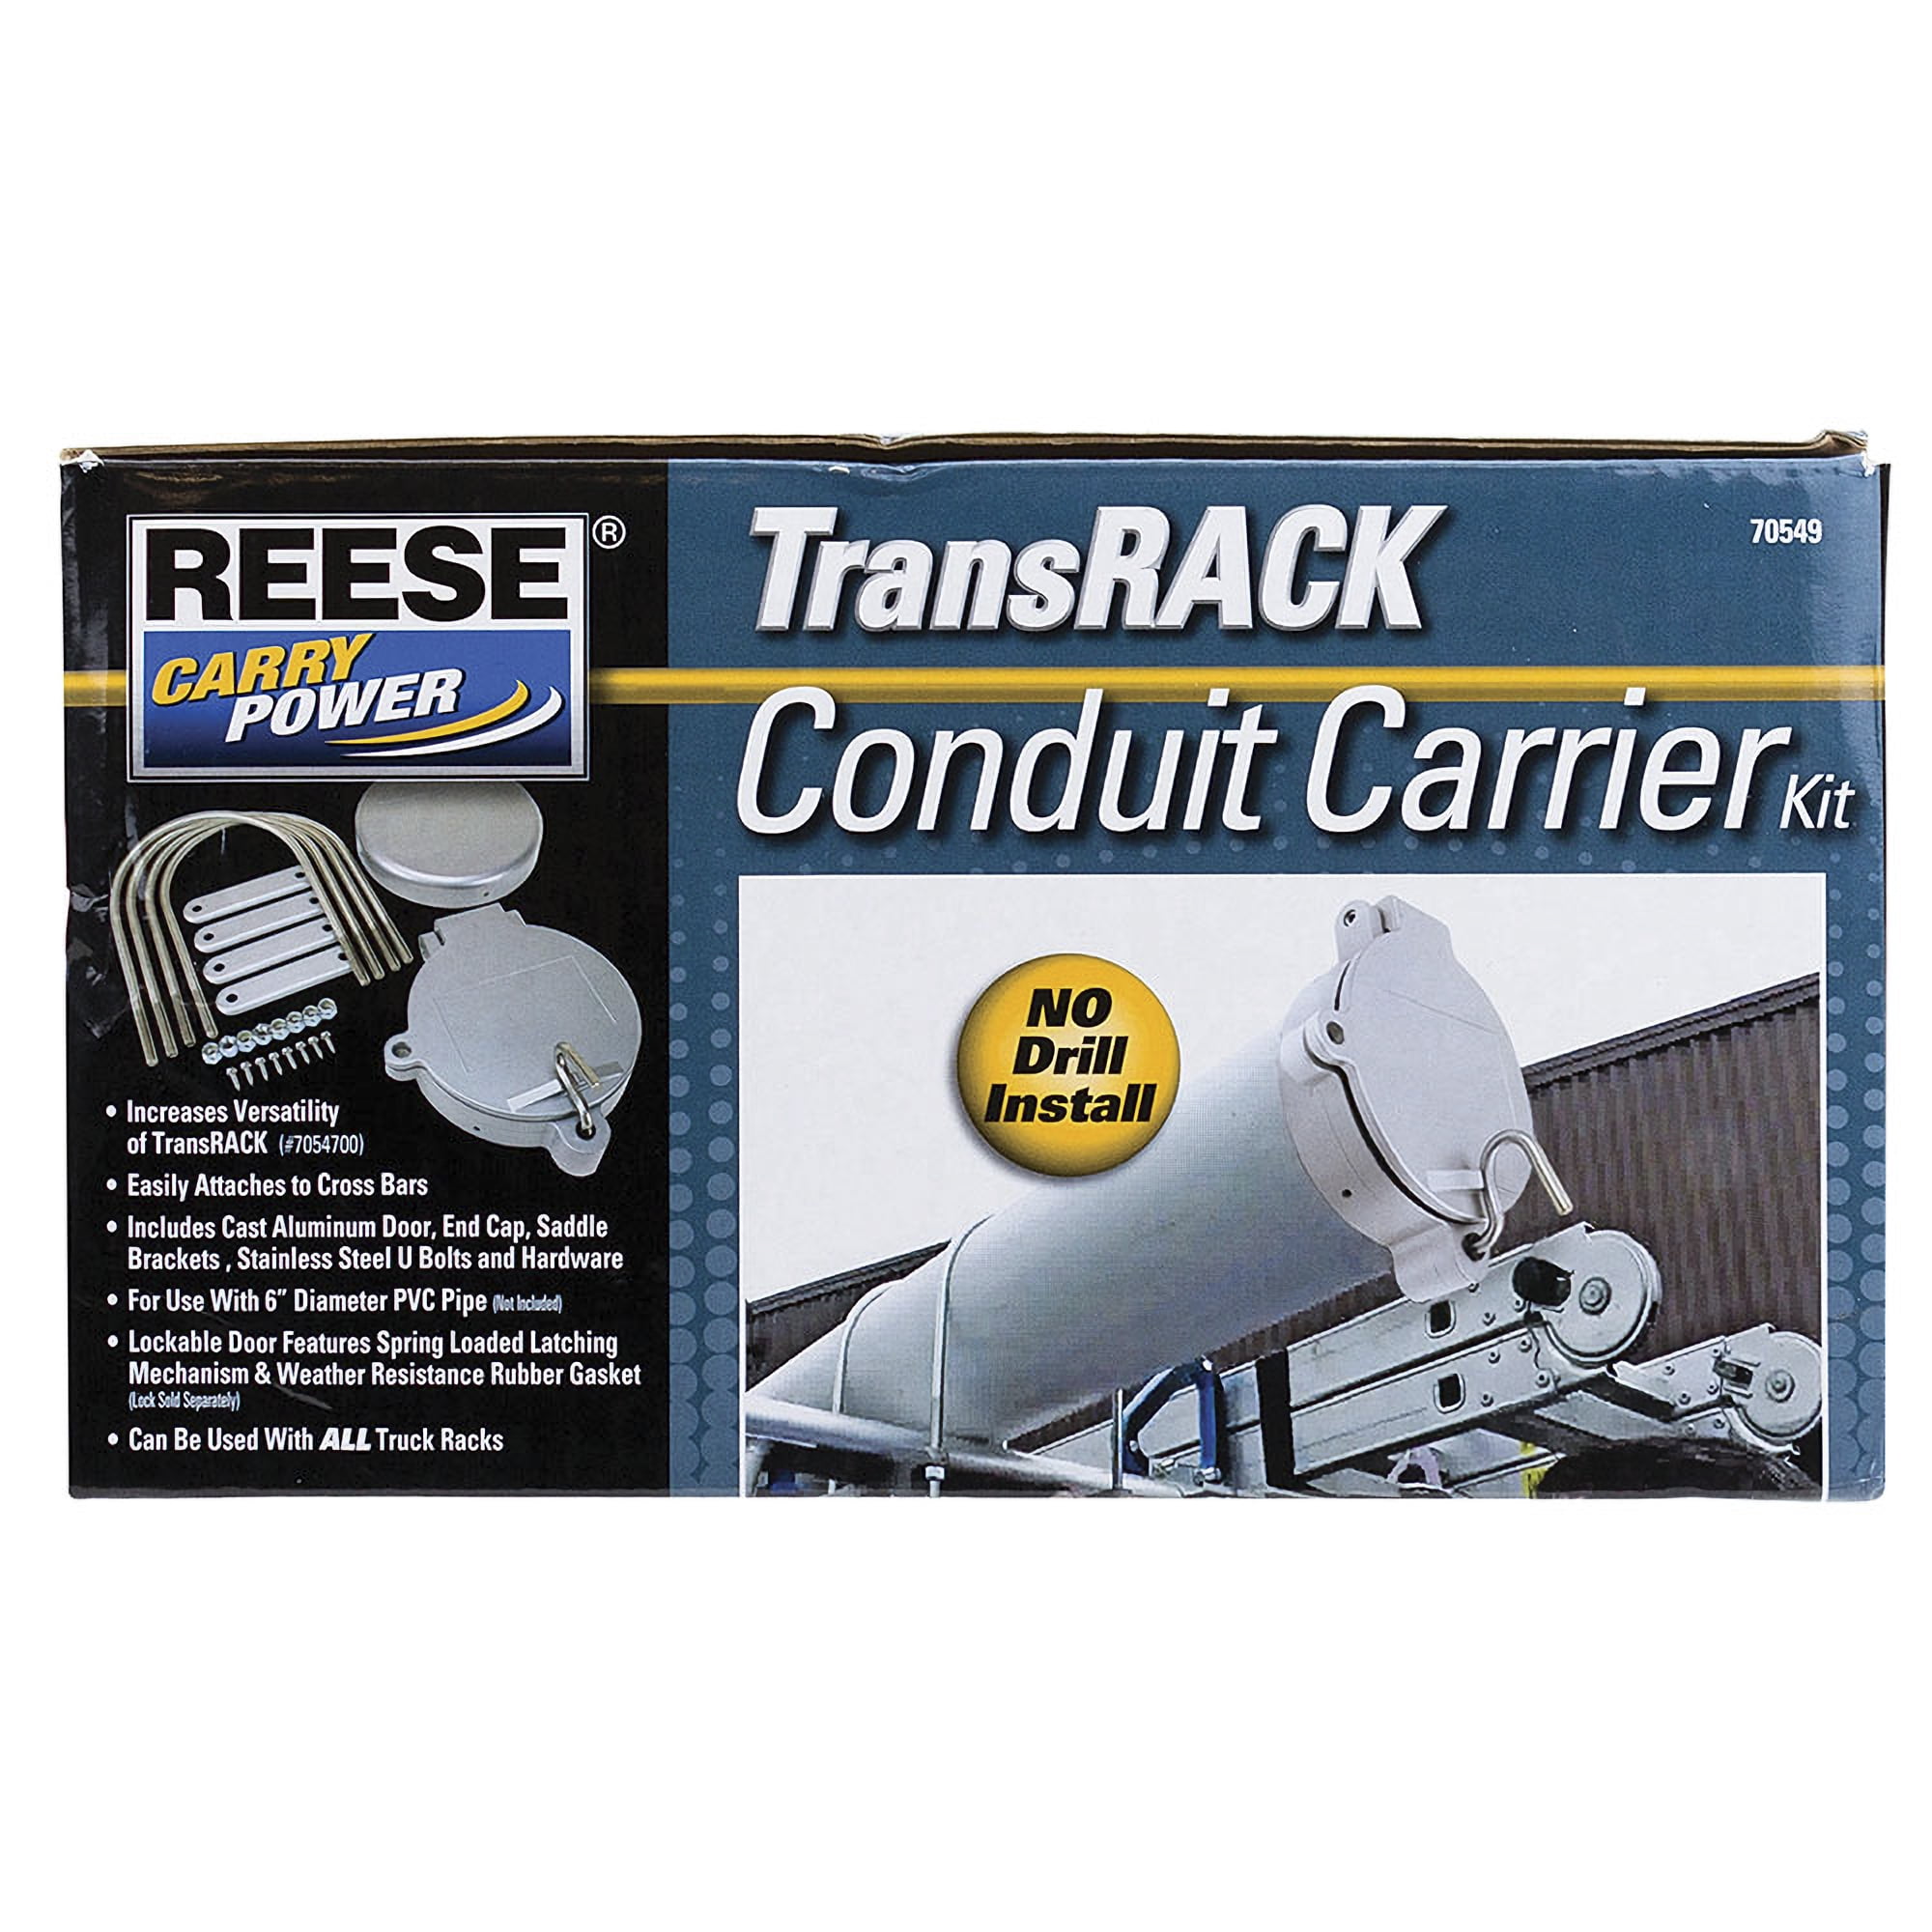 REESE Carry Power 7054900 TransRack Conduit Carrier 